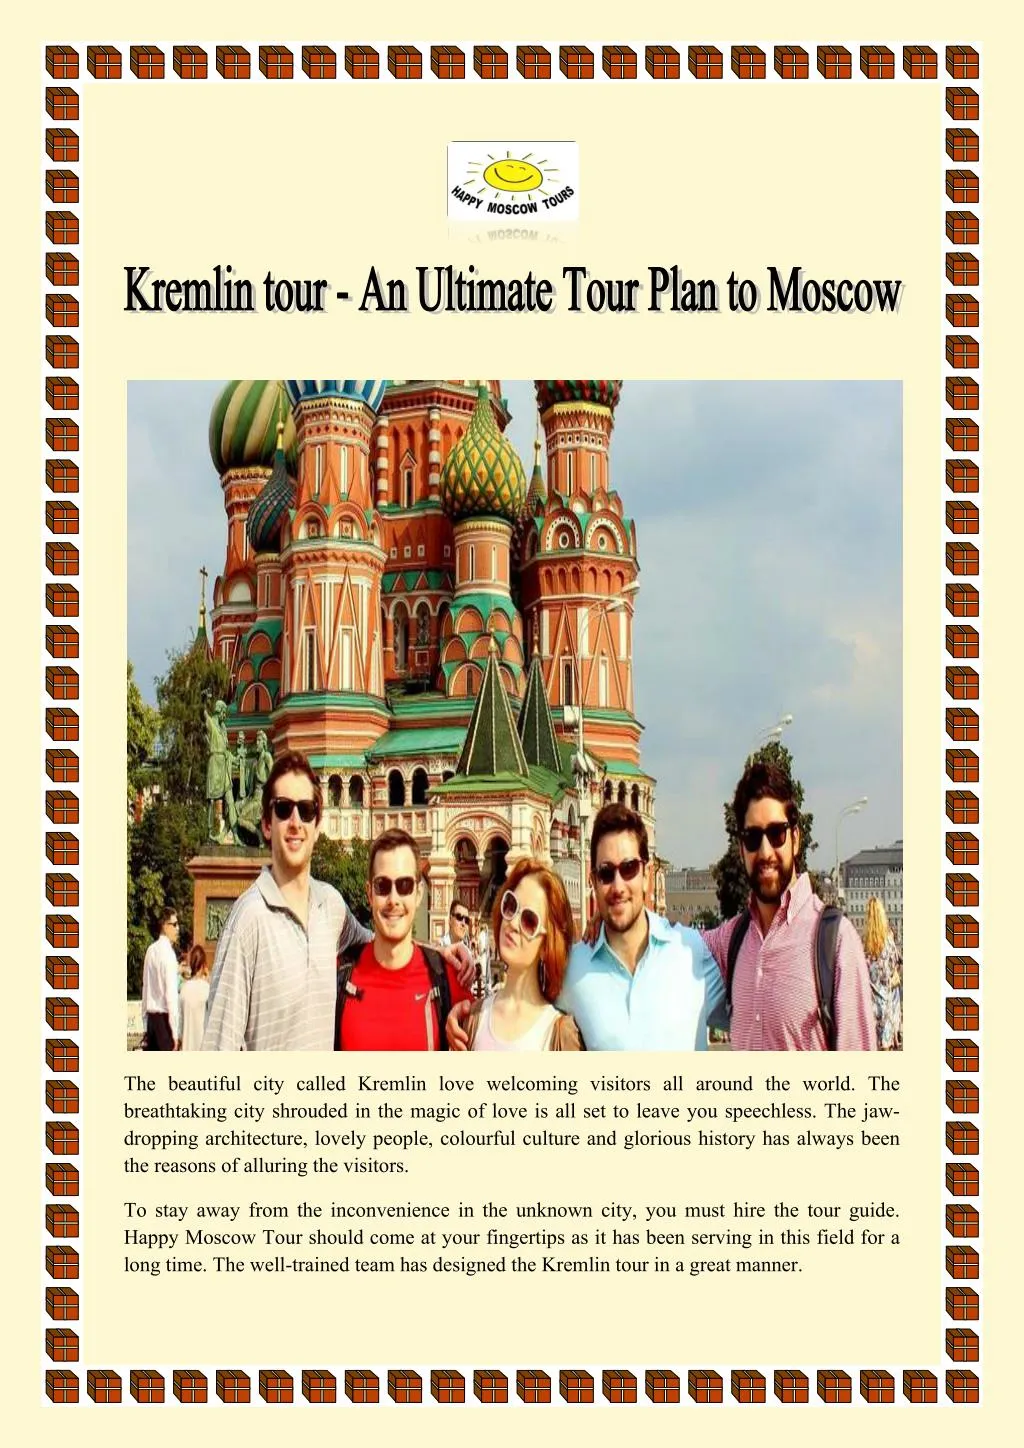 the beautiful city called kremlin love welcoming